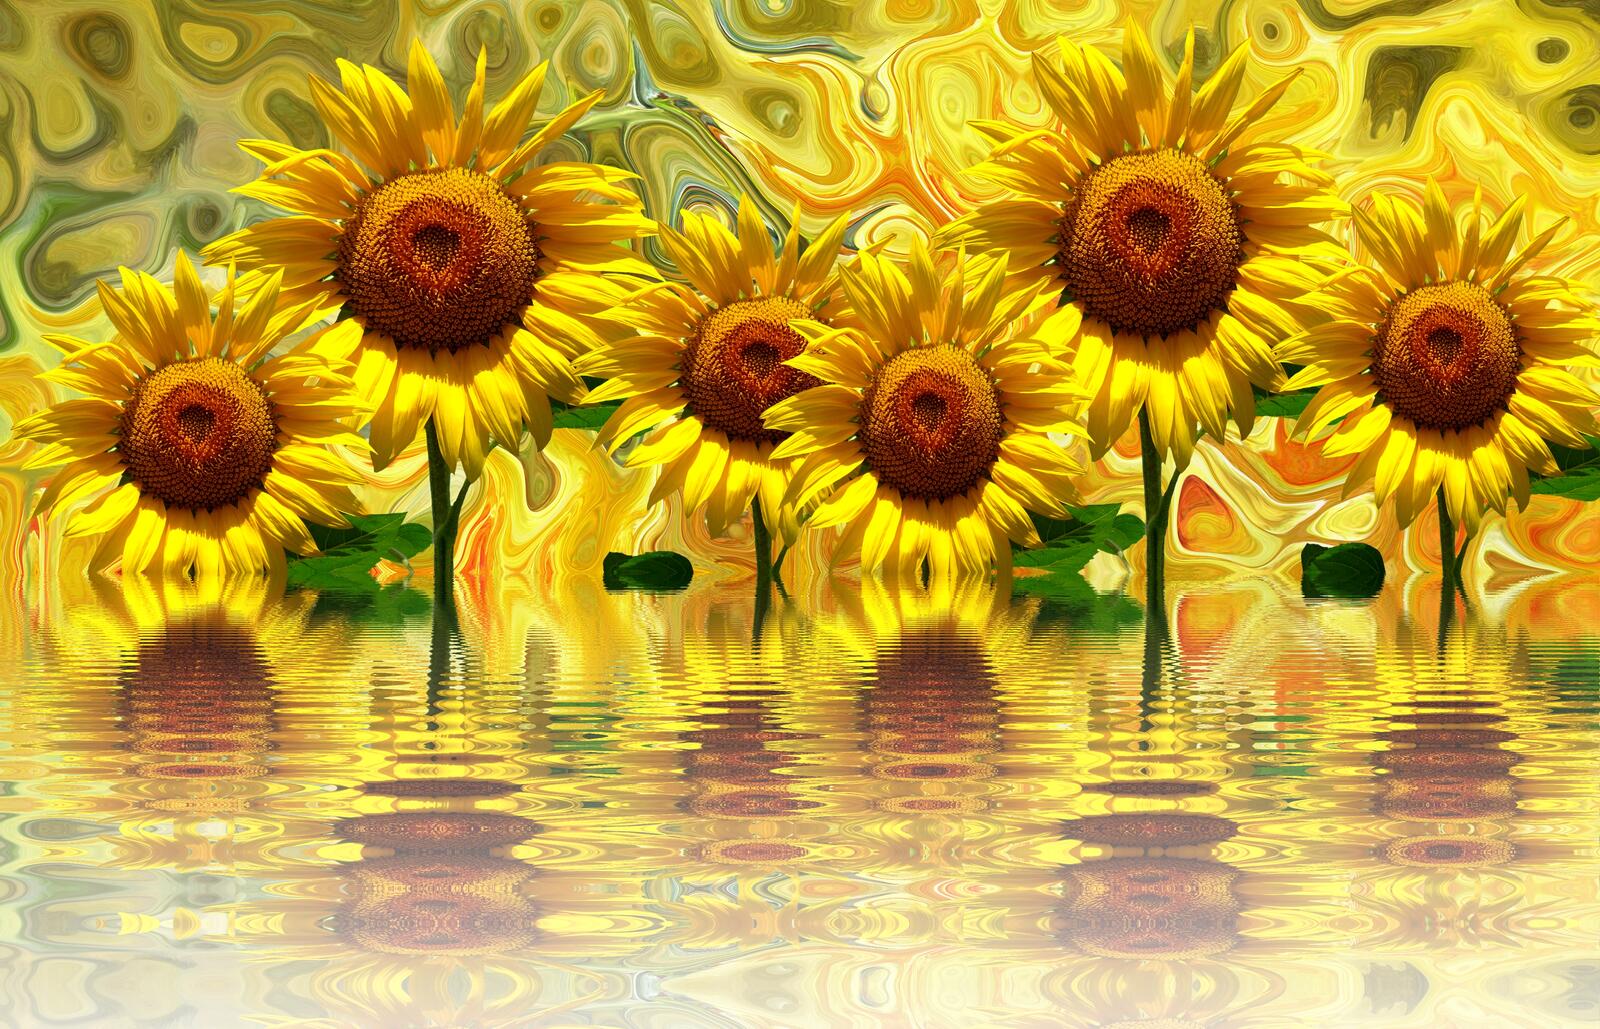 Wallpapers sunflower sunflowers flowers on the desktop